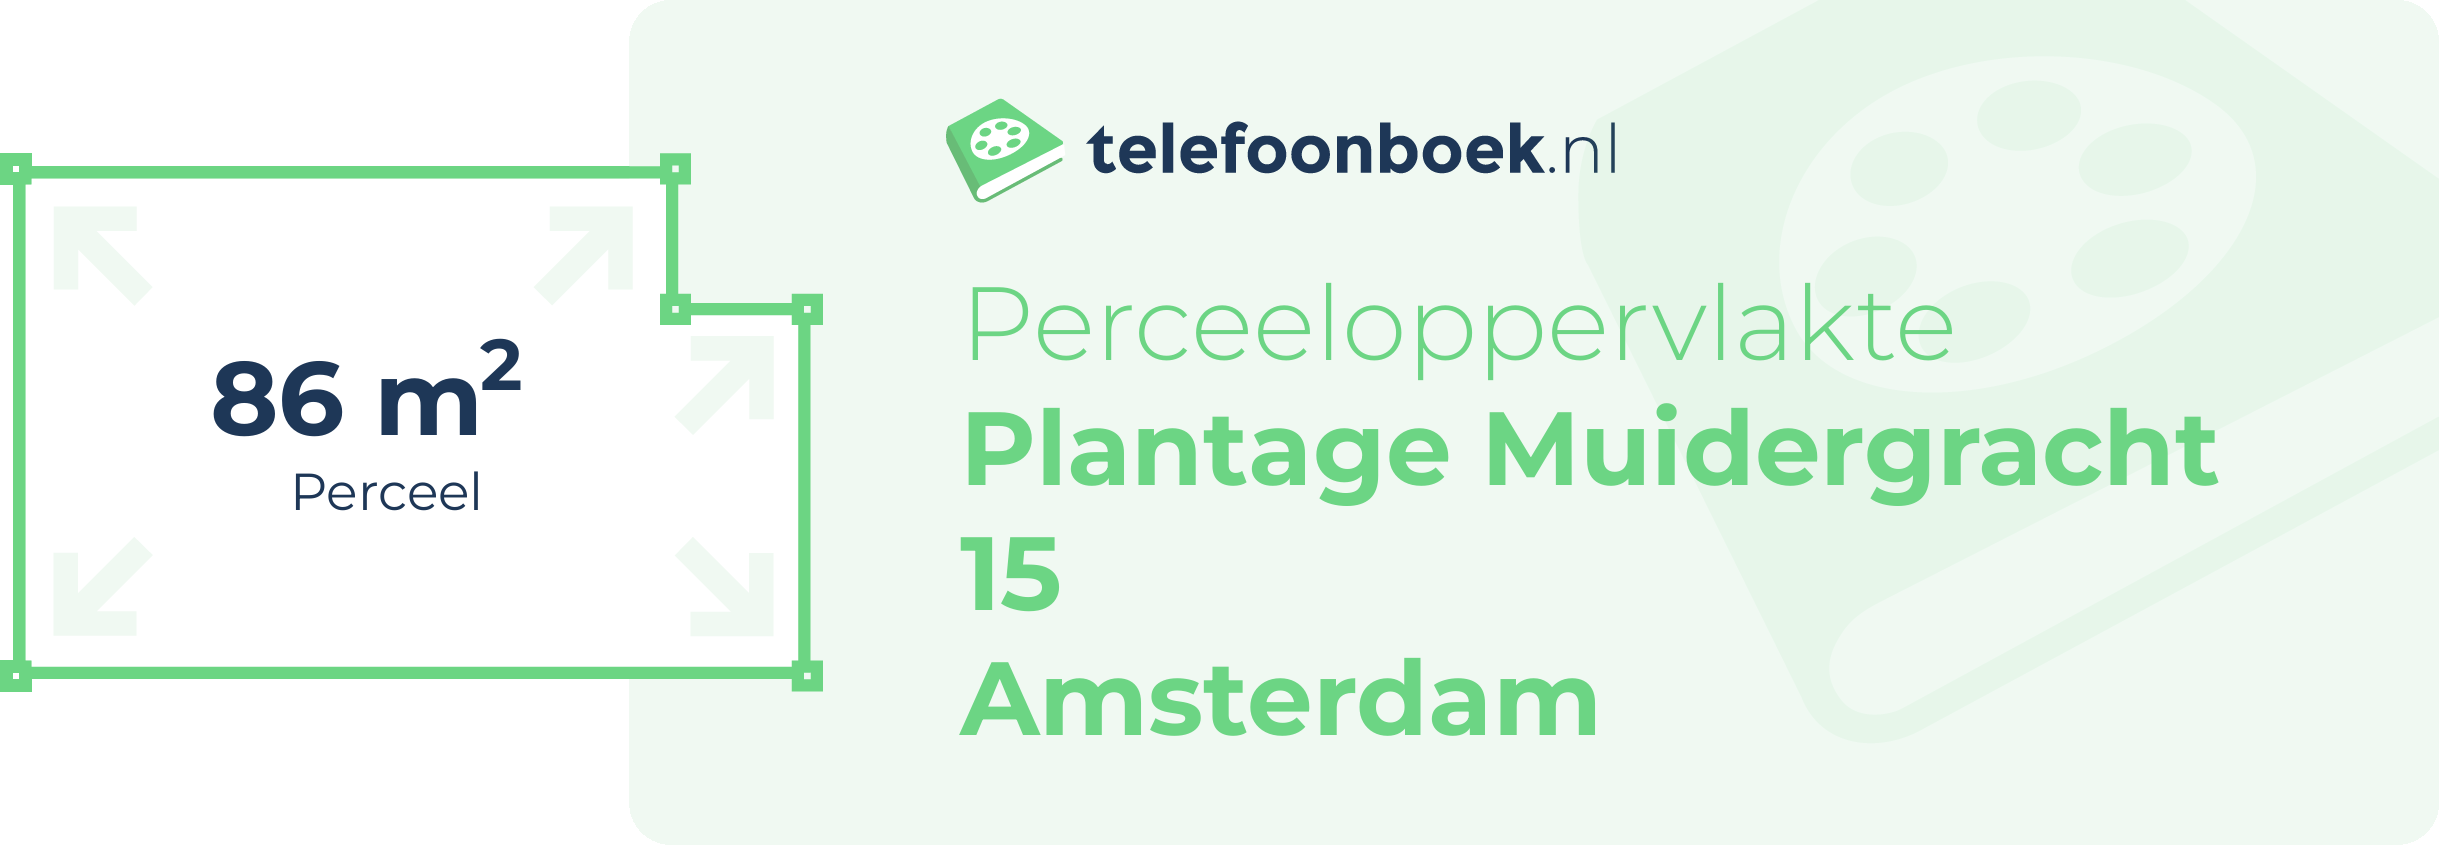 Perceeloppervlakte Plantage Muidergracht 15 Amsterdam